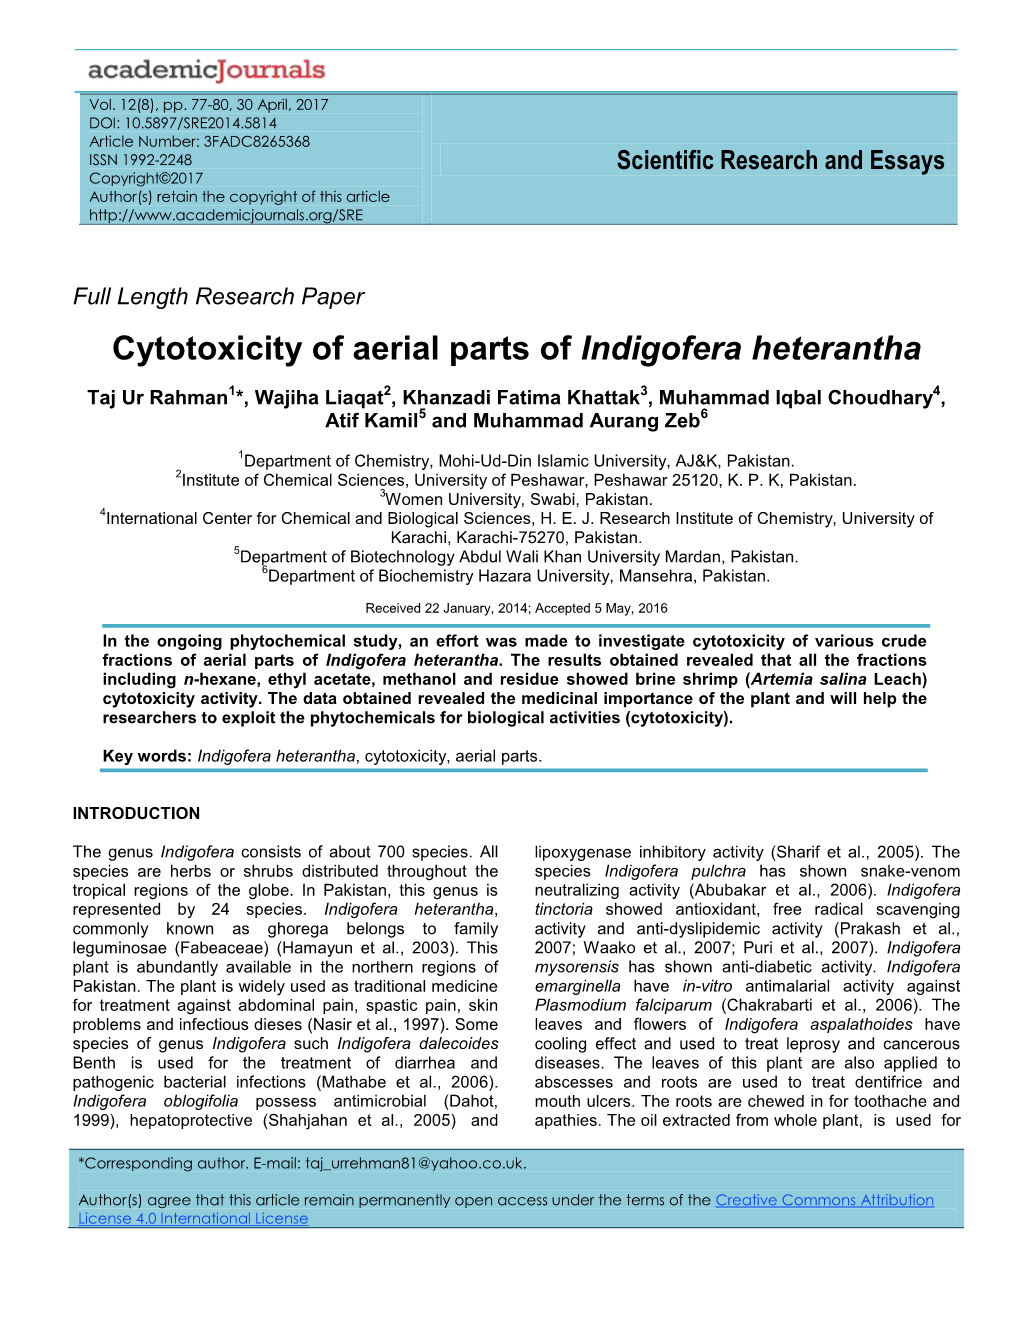 Cytotoxicity of Aerial Parts of Indigofera Heterantha